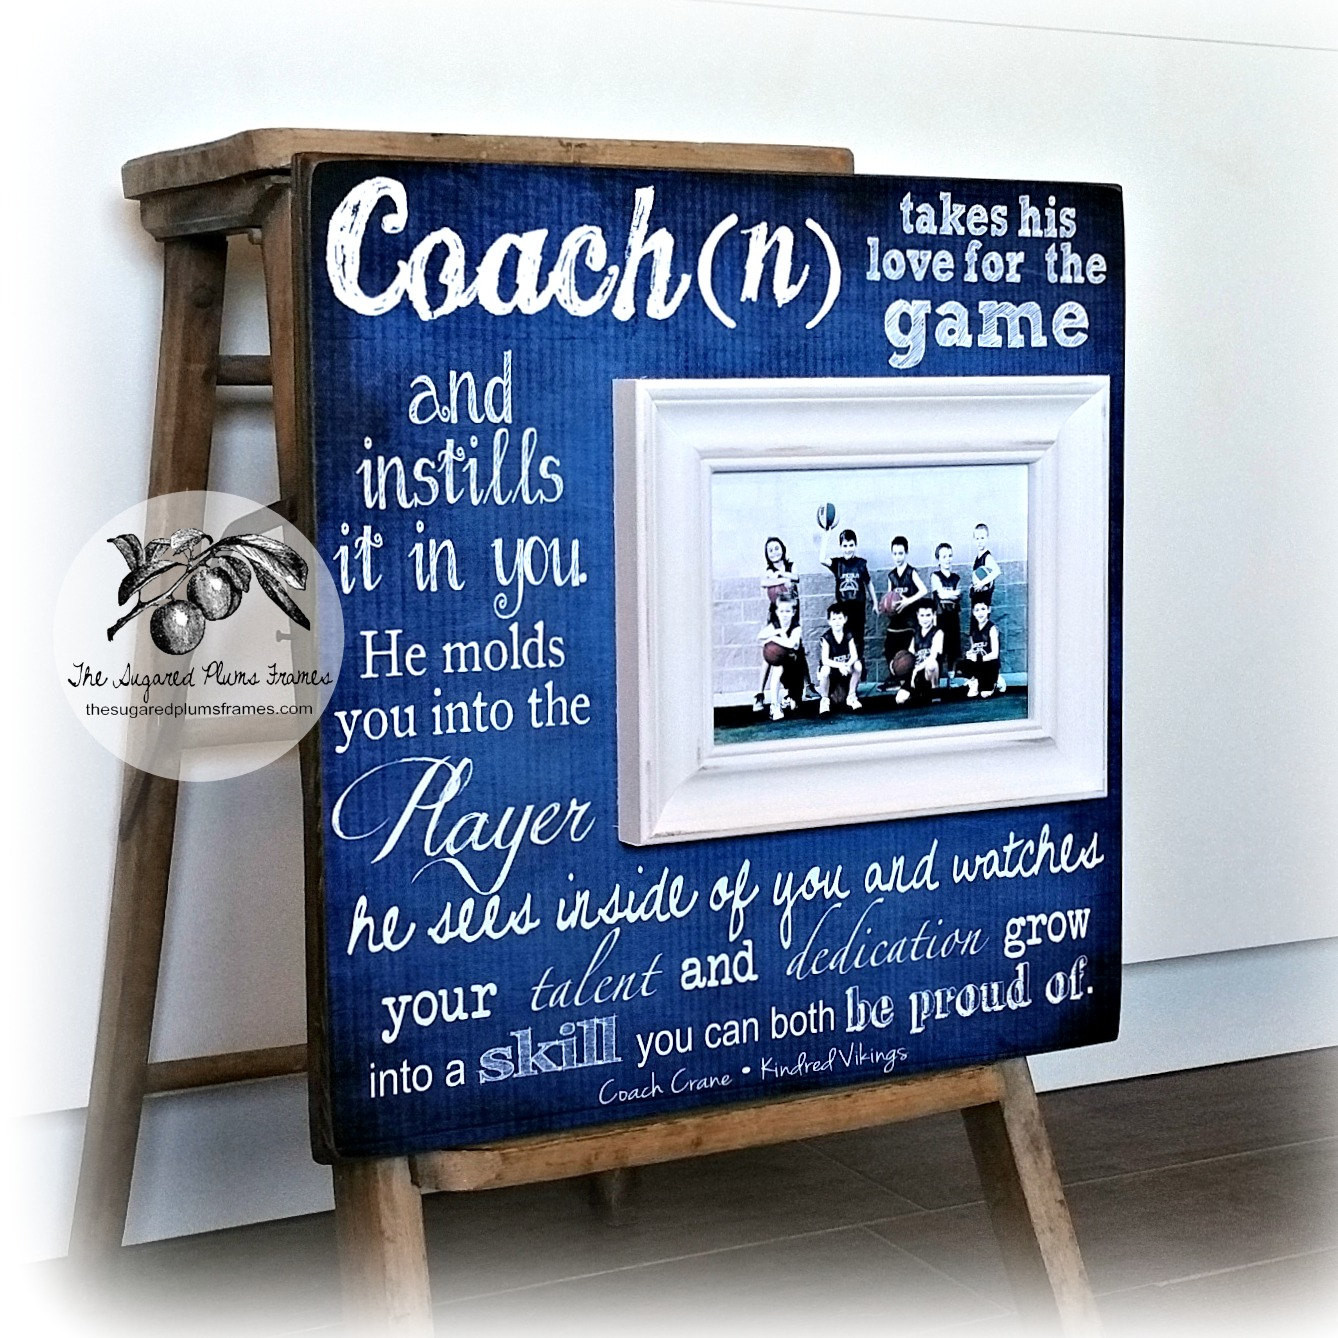 Best ideas about Baseball Coach Gift Ideas
. Save or Pin Basketball Coach Gift Coach Gift Idea Soccer Coach Now.